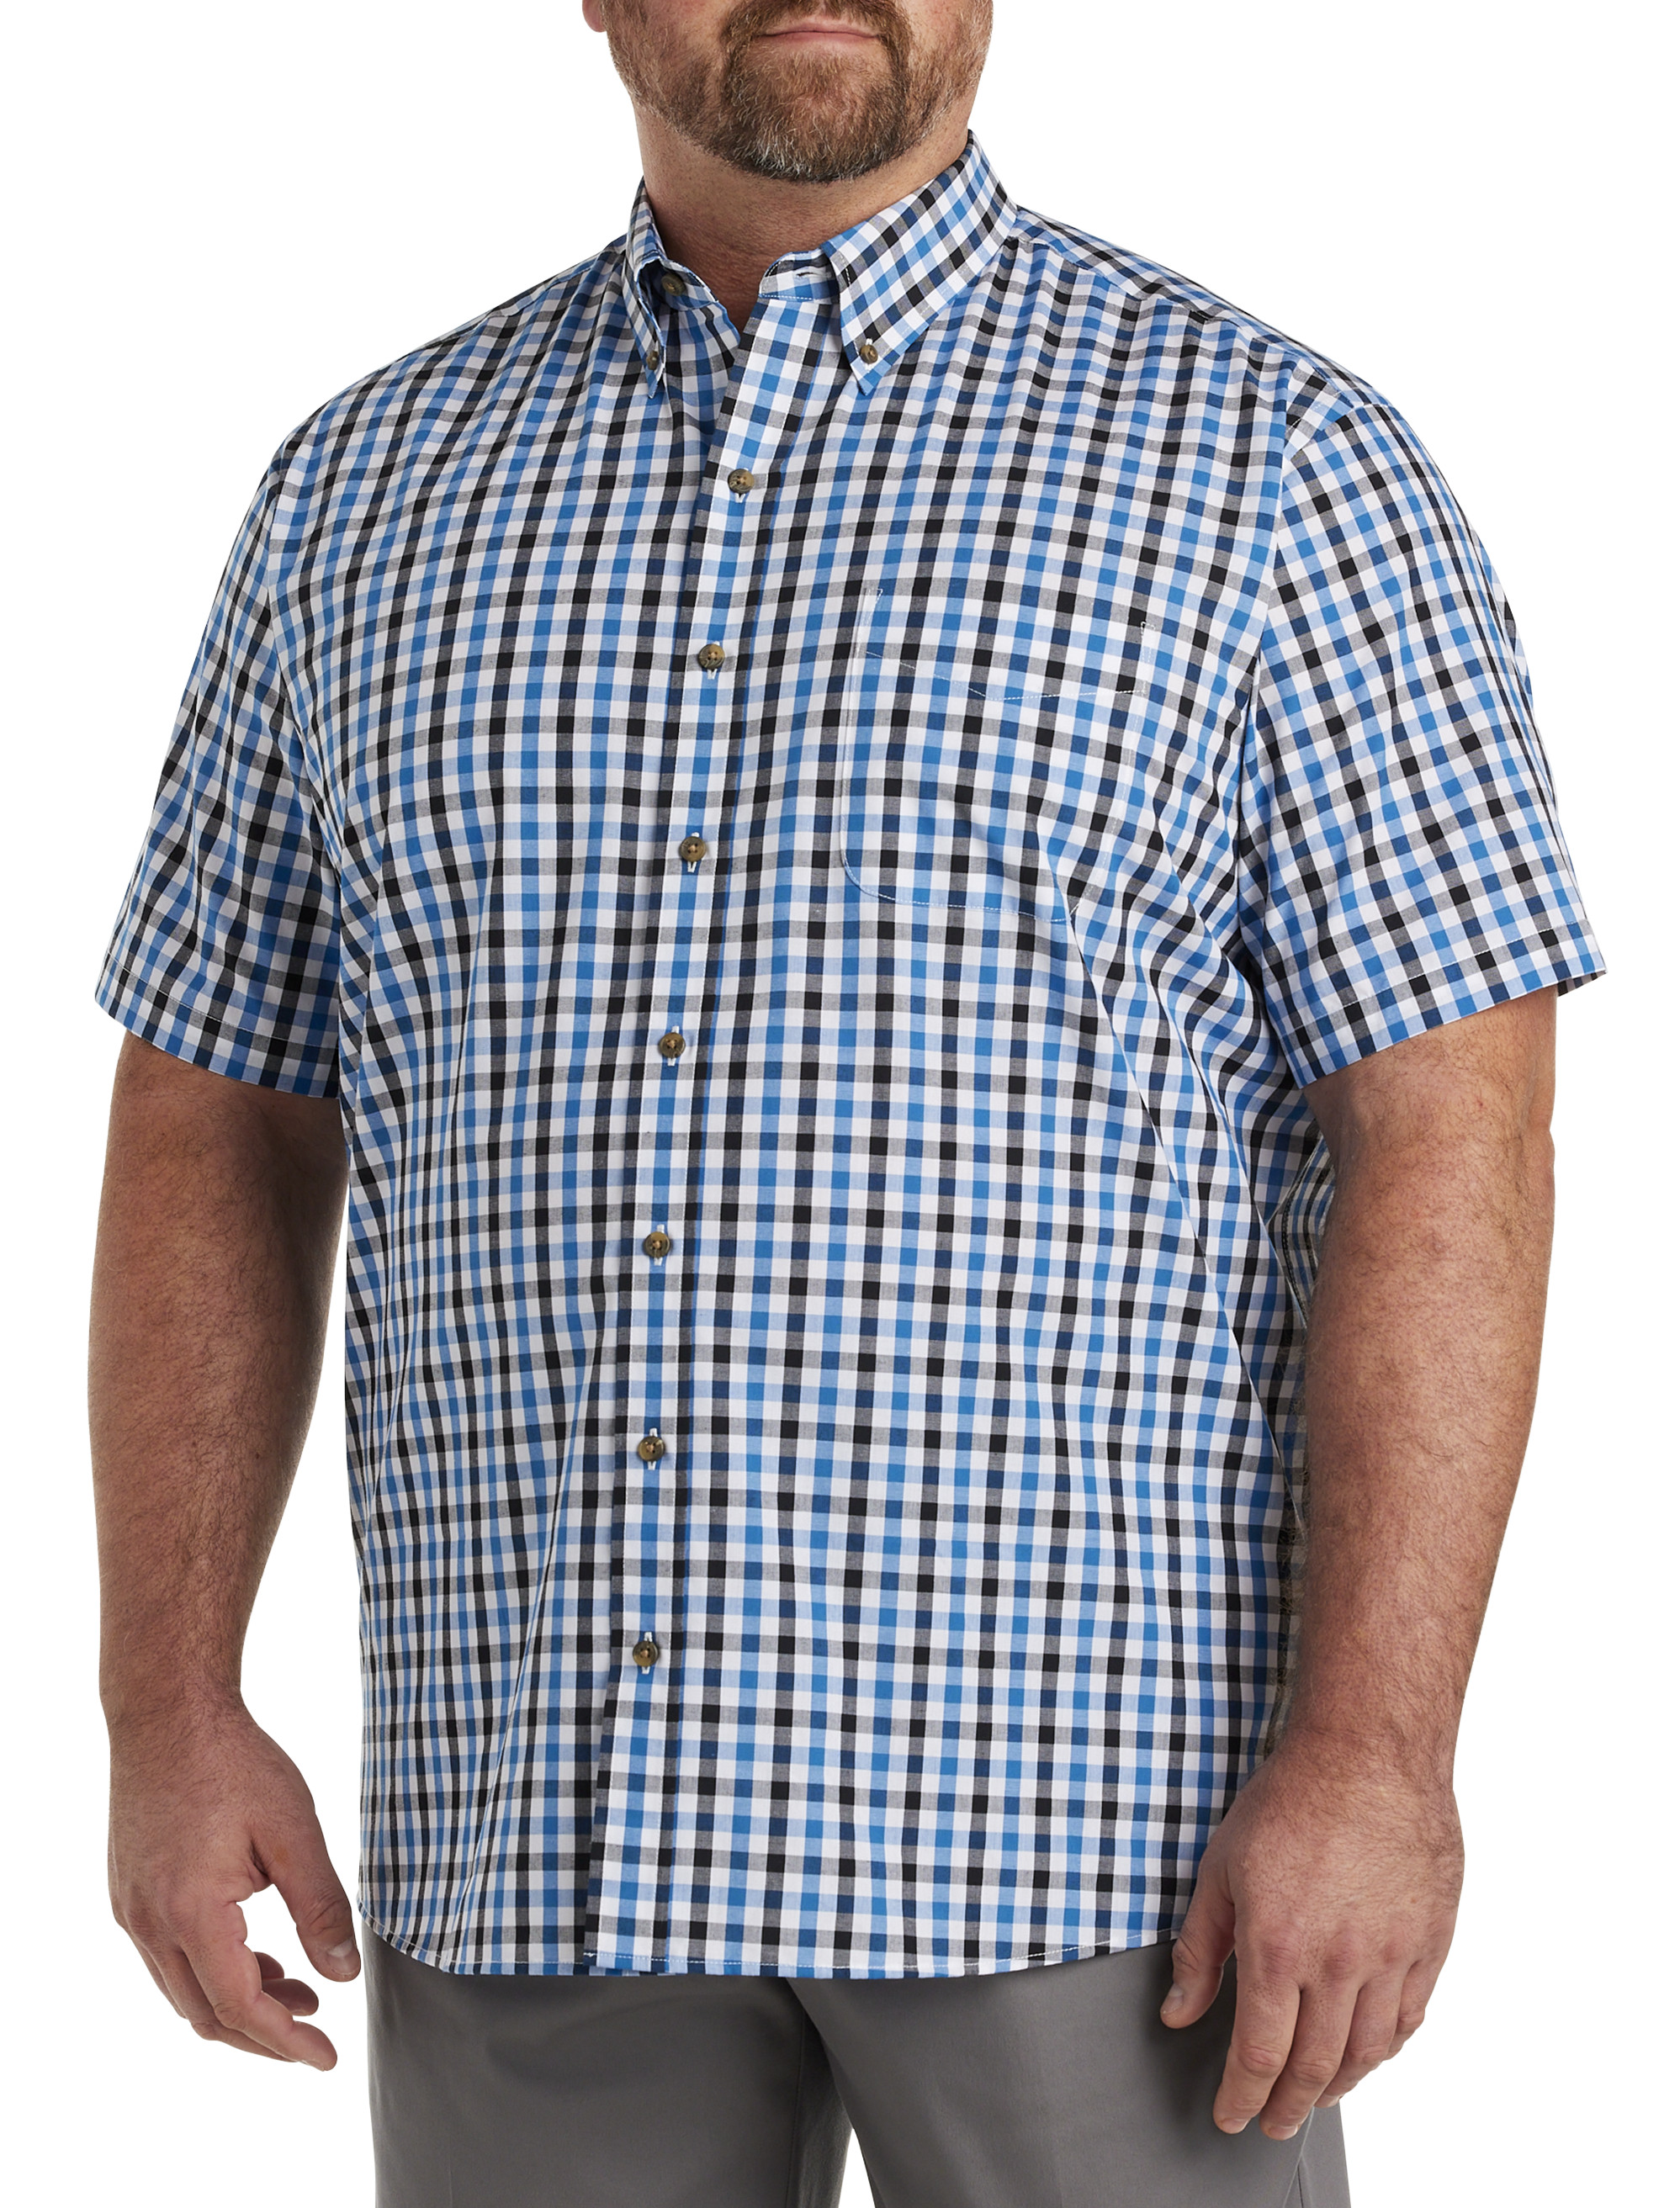 Men's Shirts Big and Tall, Men's Fishing Shirts Long Sleeve Travel Work  Shirts Button Down Shirts with Pockets